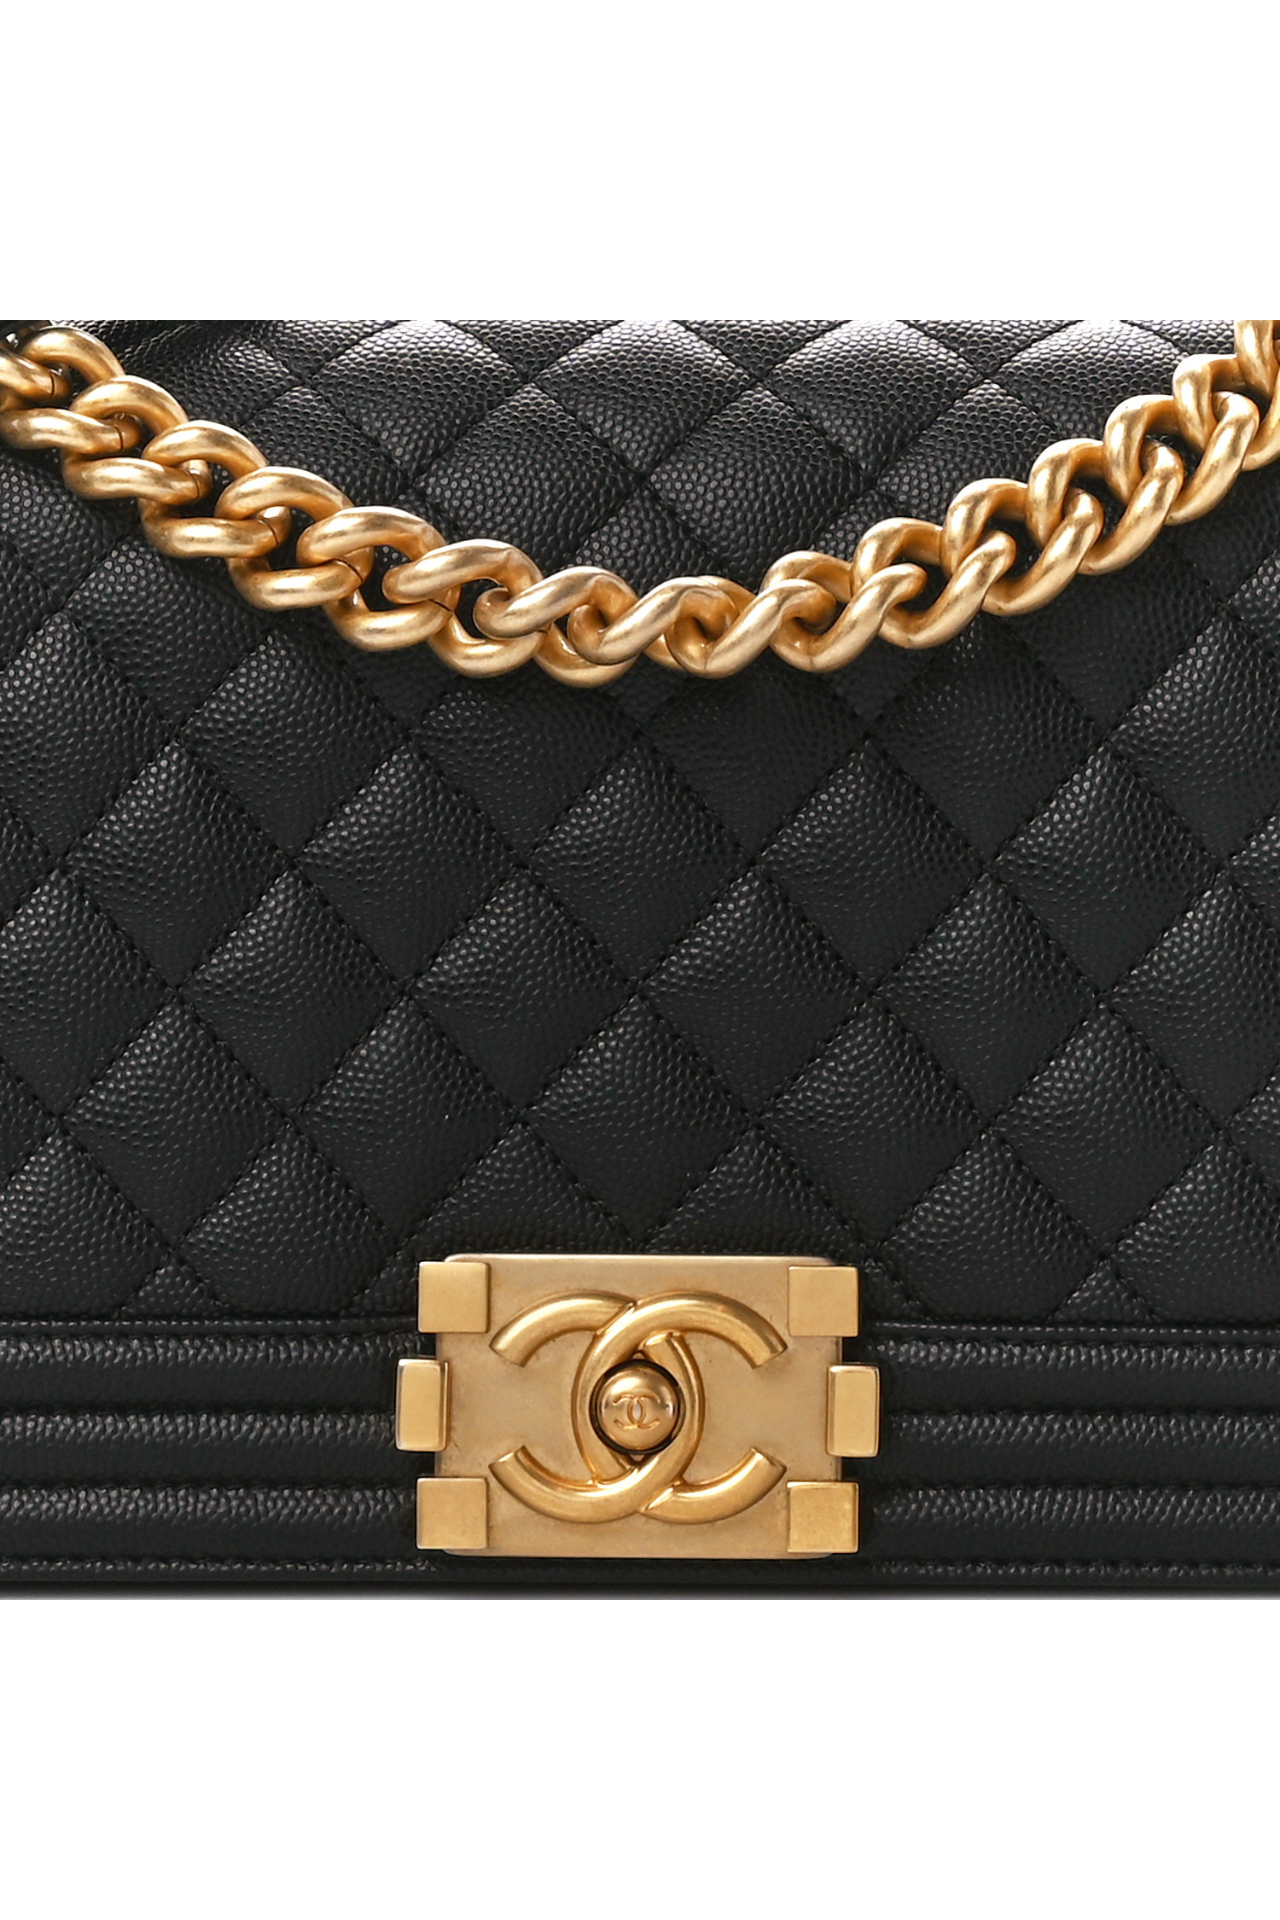 PreOwned Chanel Medium Boy Bag Caviar Black Women Dubai